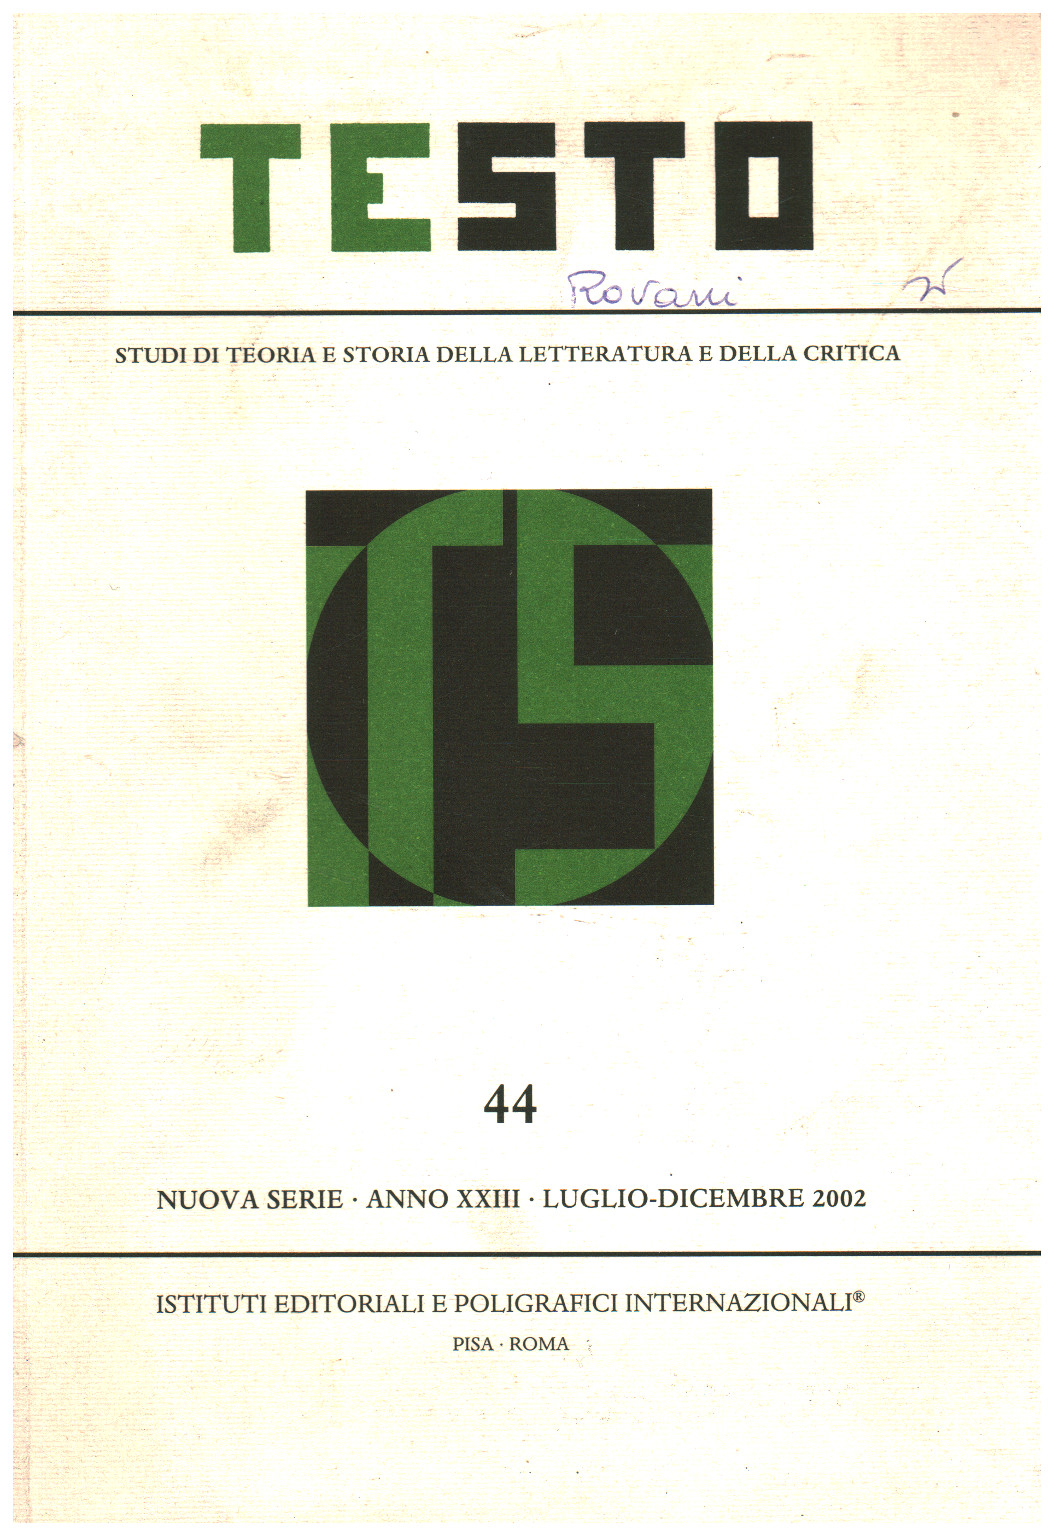 Texto,44, Año XXIII, julio-diciembre,2002, AA.VV